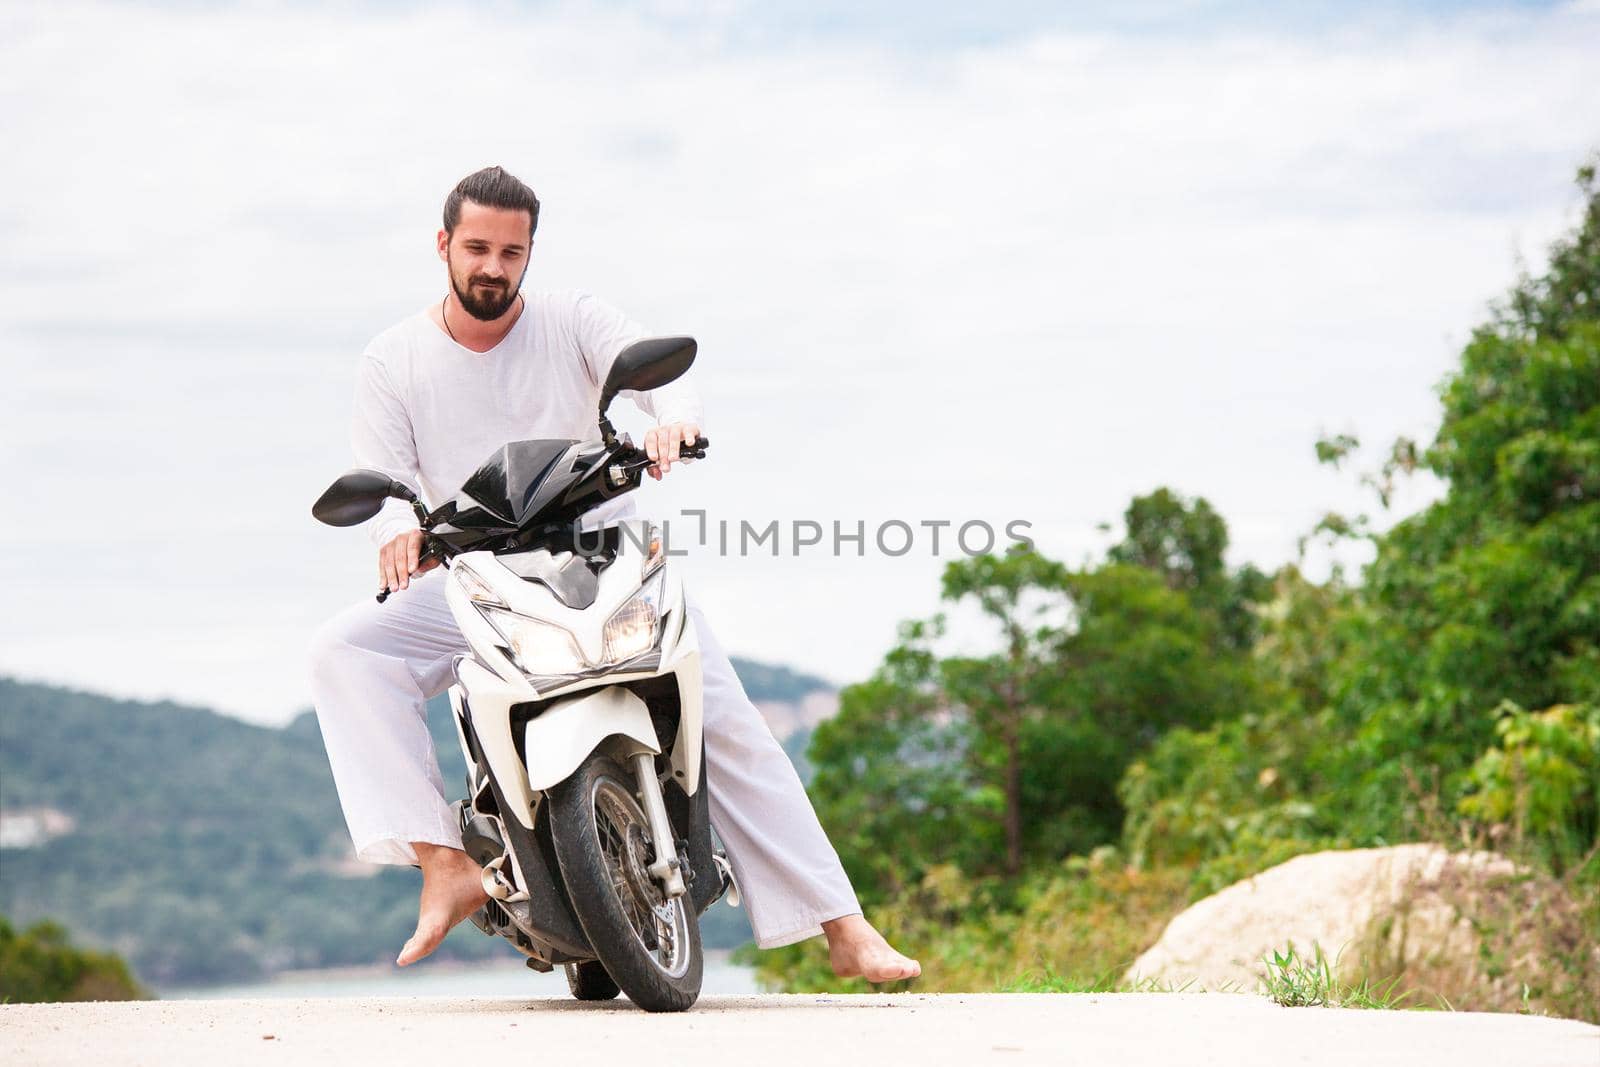 Brutal biker with beard wearing white sitting on motorbike in mountains. by Jyliana